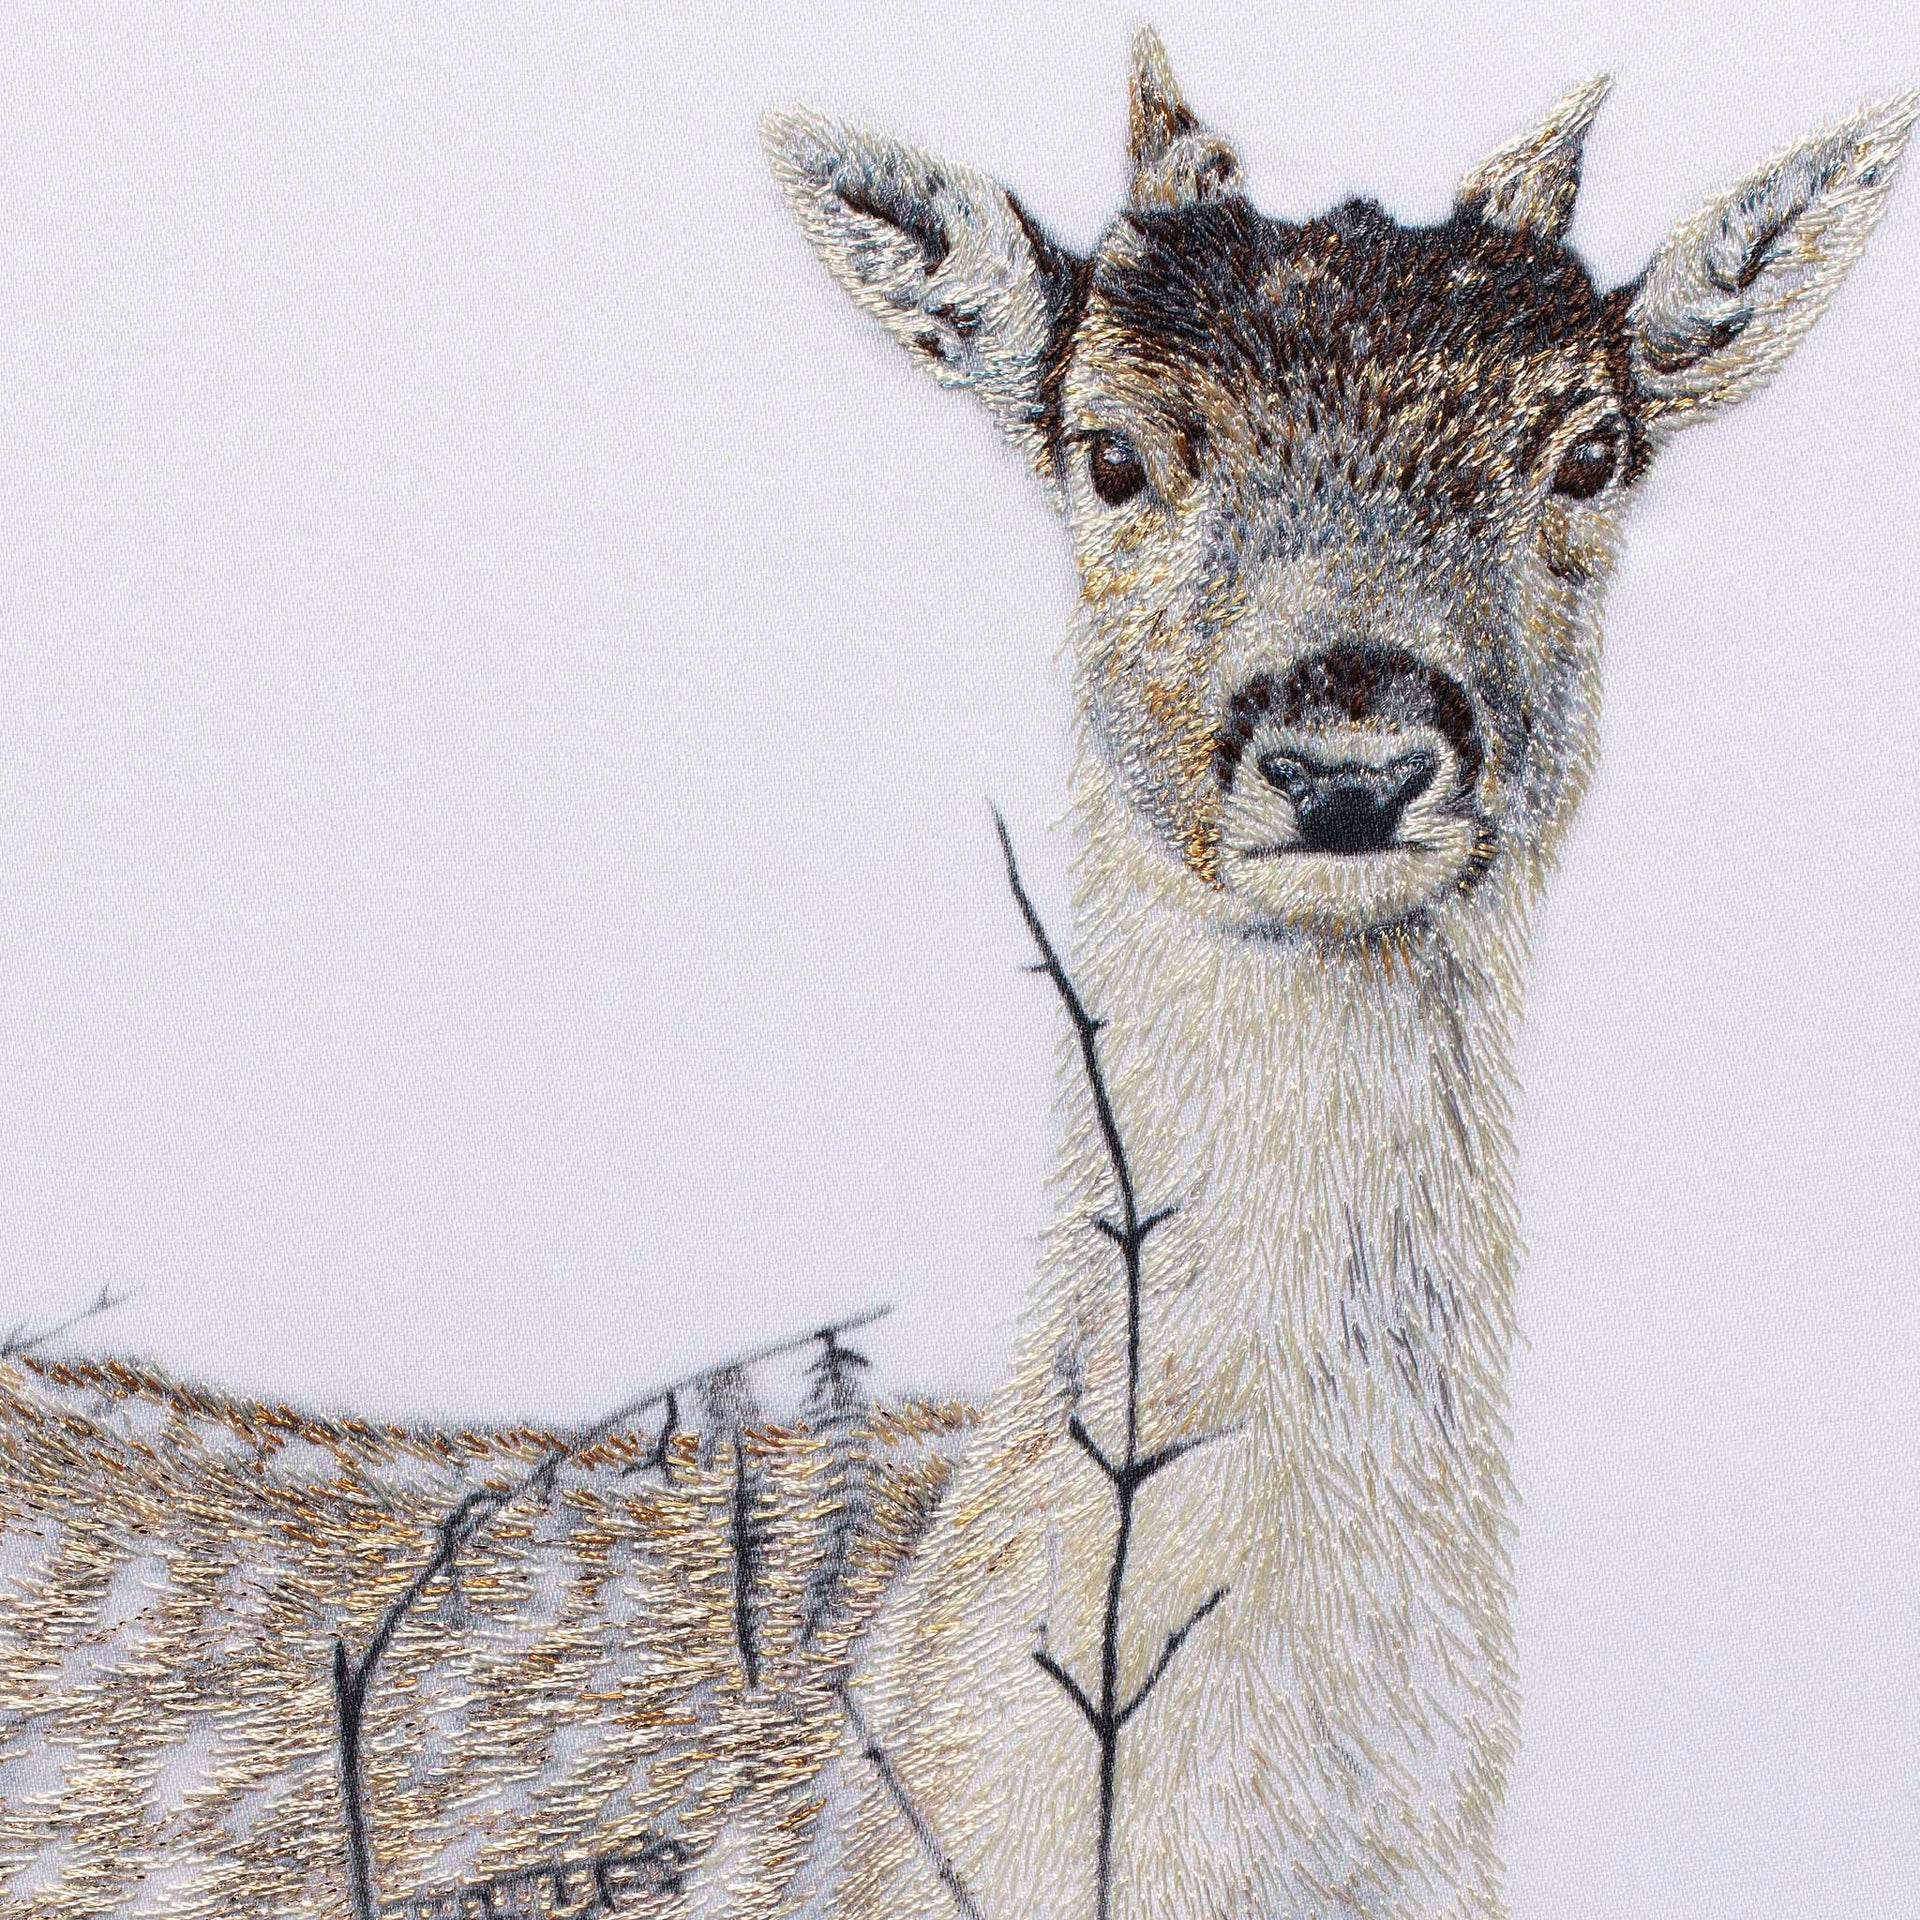 Original young deer hand embroidered artwork close up